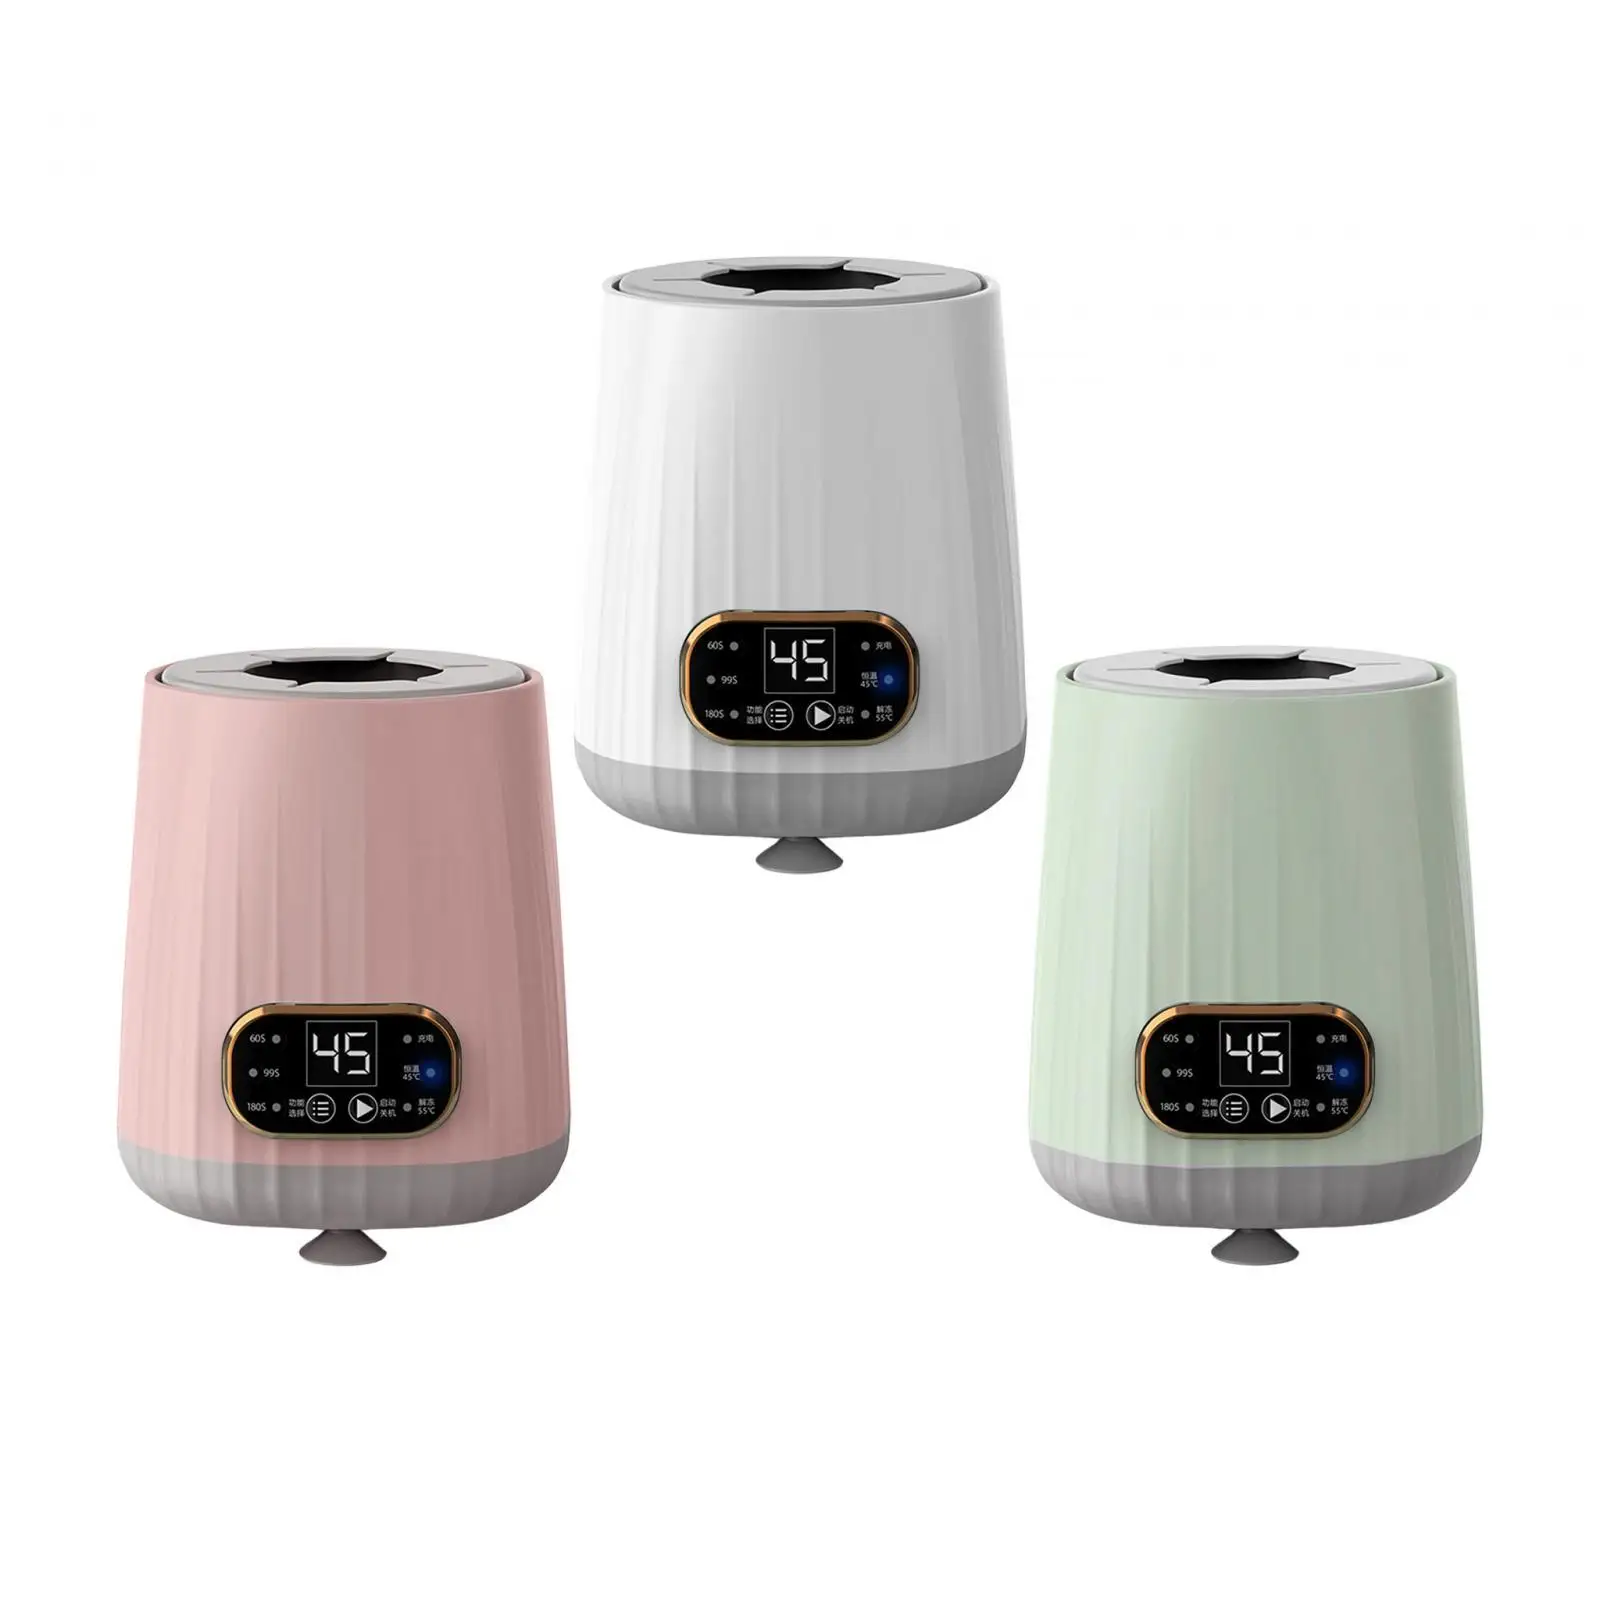 Electric Milk Bottle Shaker Conveneint Portable USB Charging Electric Milk Blender for Traveling Night Camping Nursing Shopping